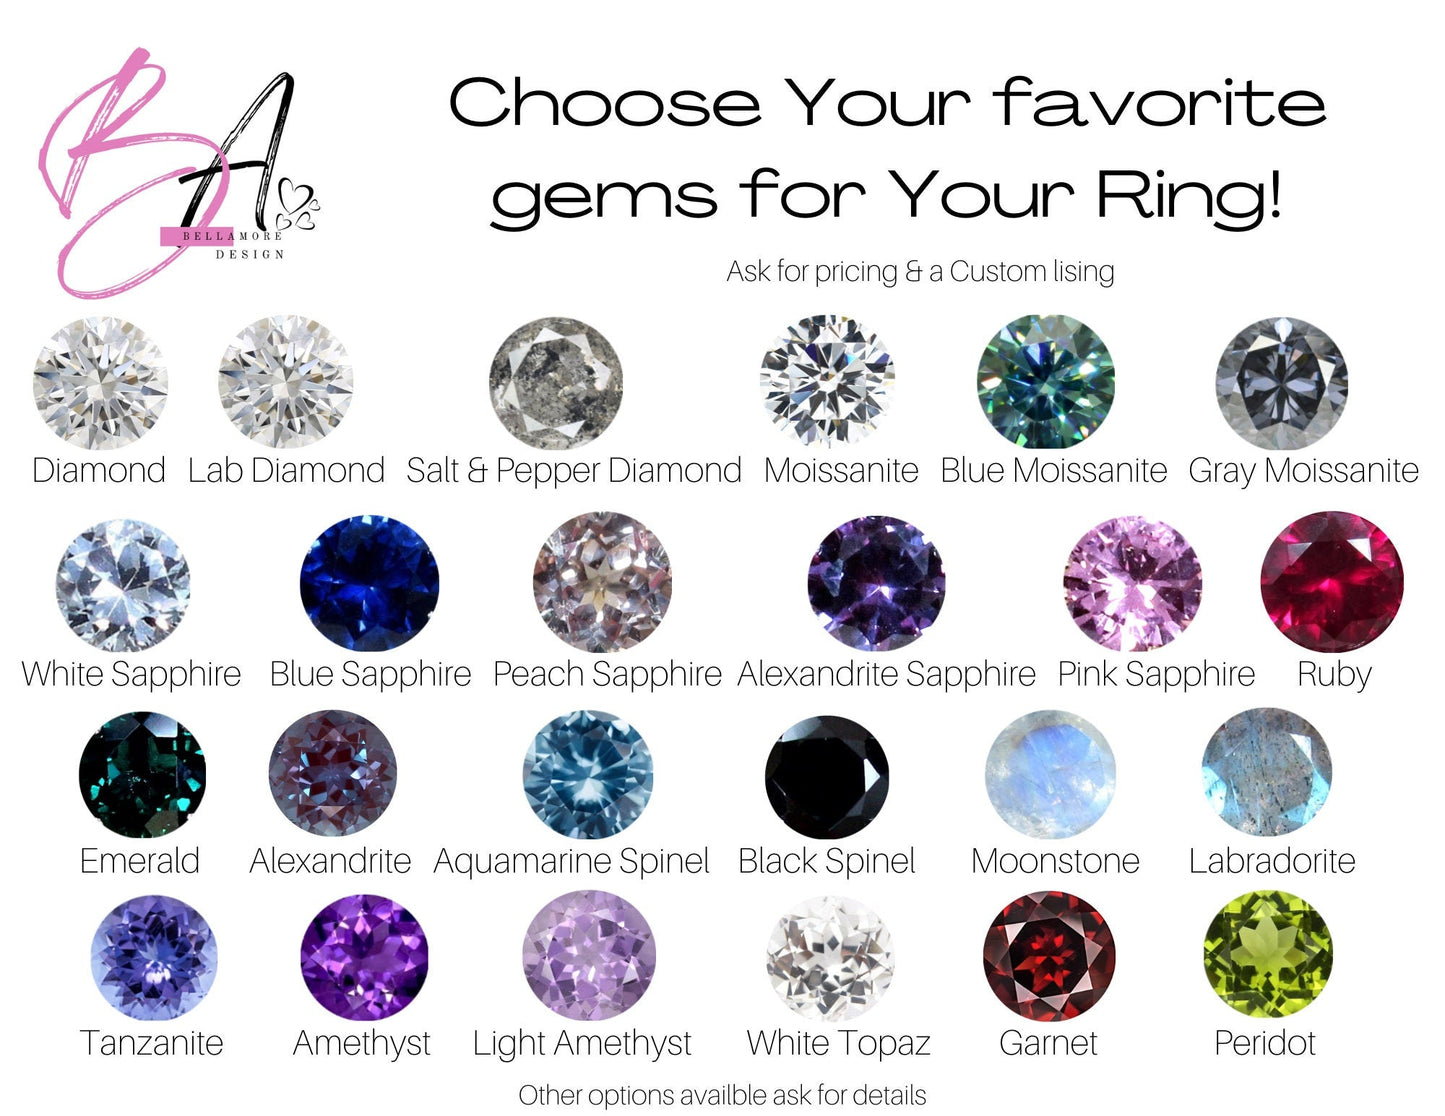 Alexandrite Sapphire Engagement Ring, Pink Sapphire, Oval, Antique, Filigree, Milgrain, Polymnia, 3ct 9x7mm BellaMoreDesign.com